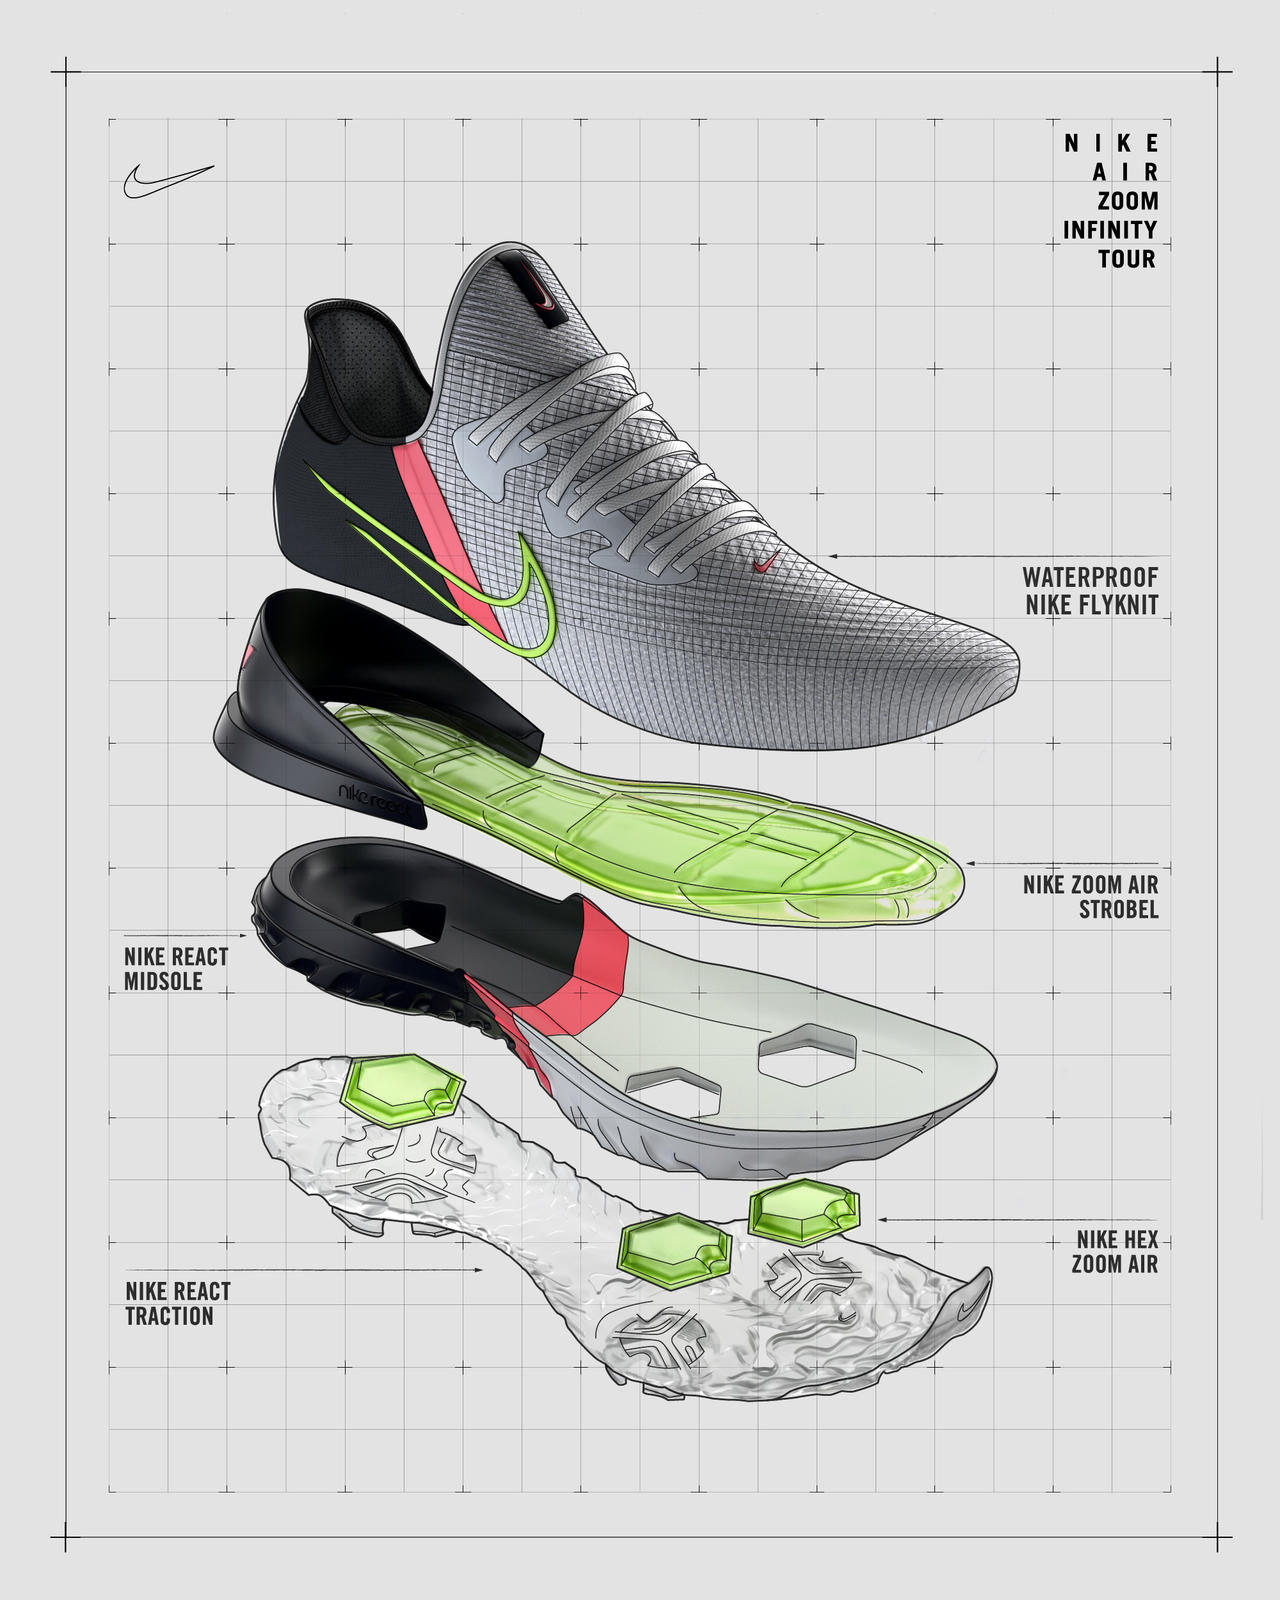 Nike Golf reveals Brooks Koepka's Air Zoom Infinity Tour golf shoe